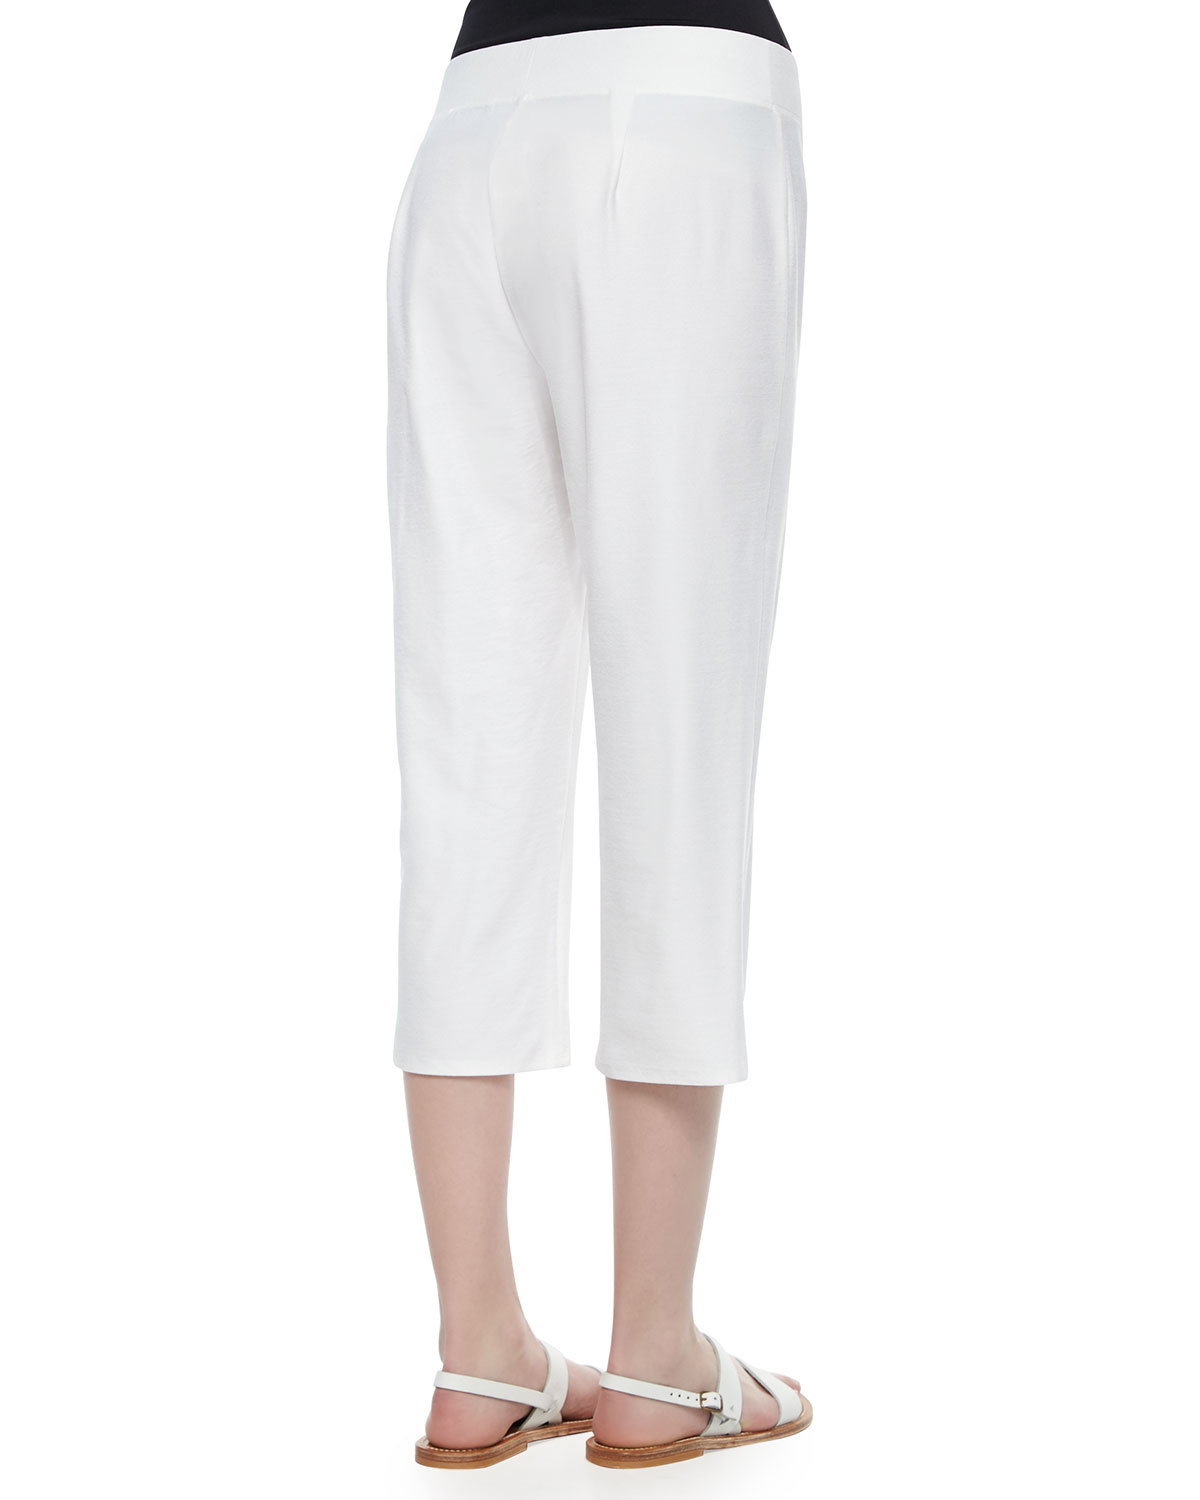 Lyst - Eileen Fisher Slim Crepe Capri Pants in White